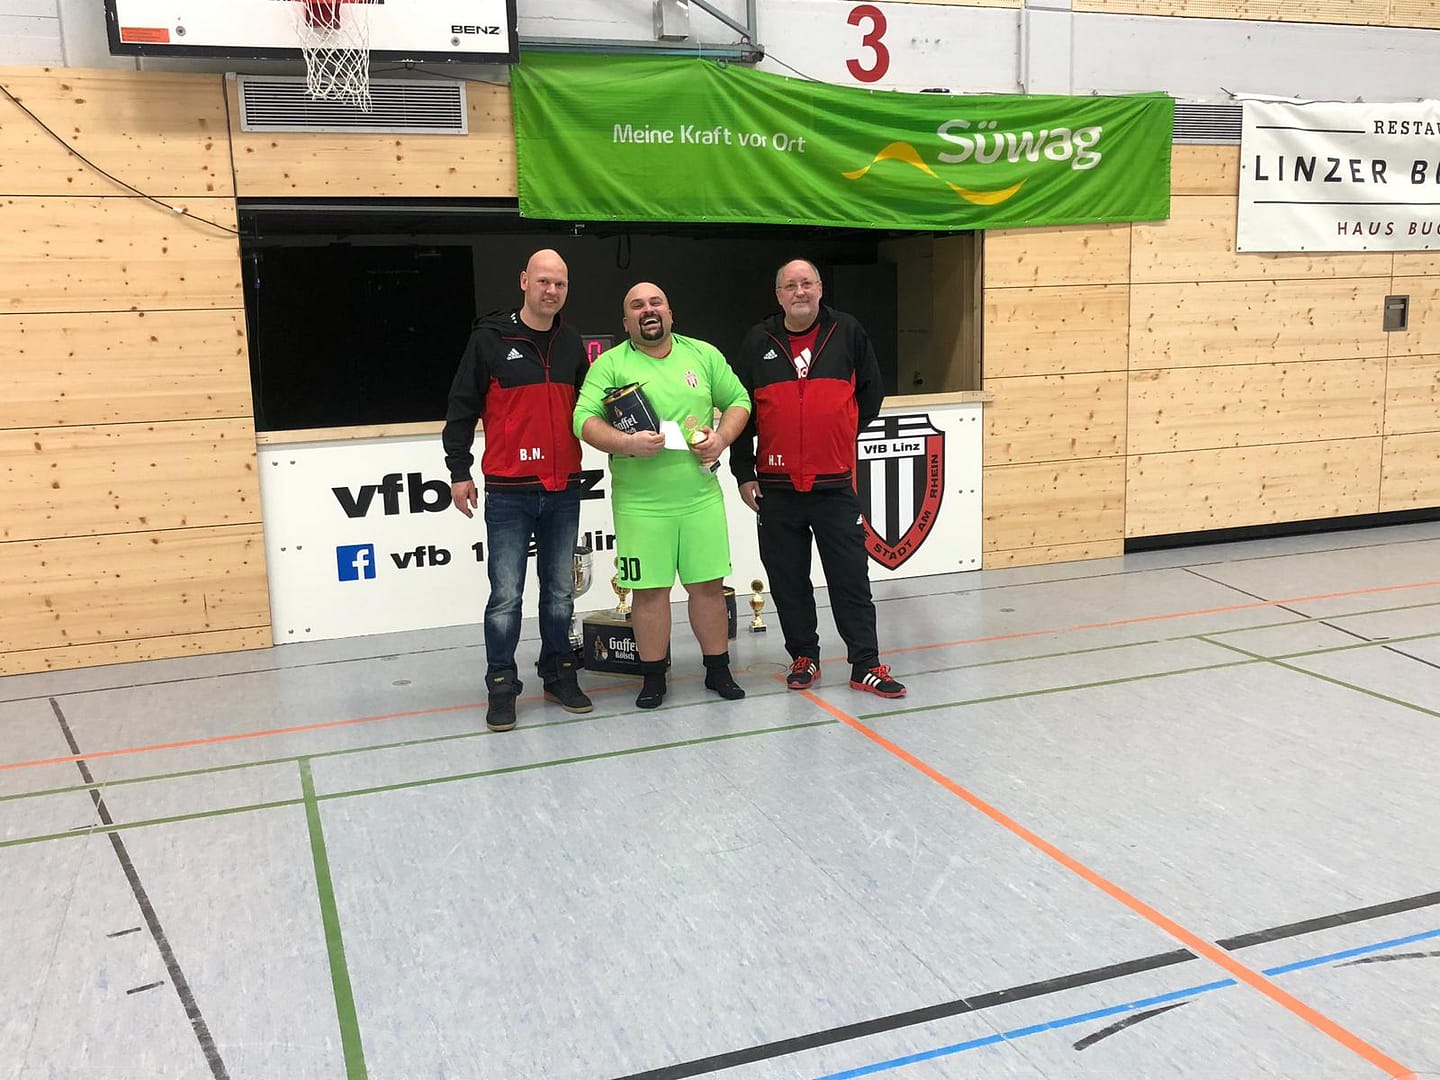 Süwag Hallencup 2019 - Seniorenturnier - 3. Platz SV Ataspor Unkel